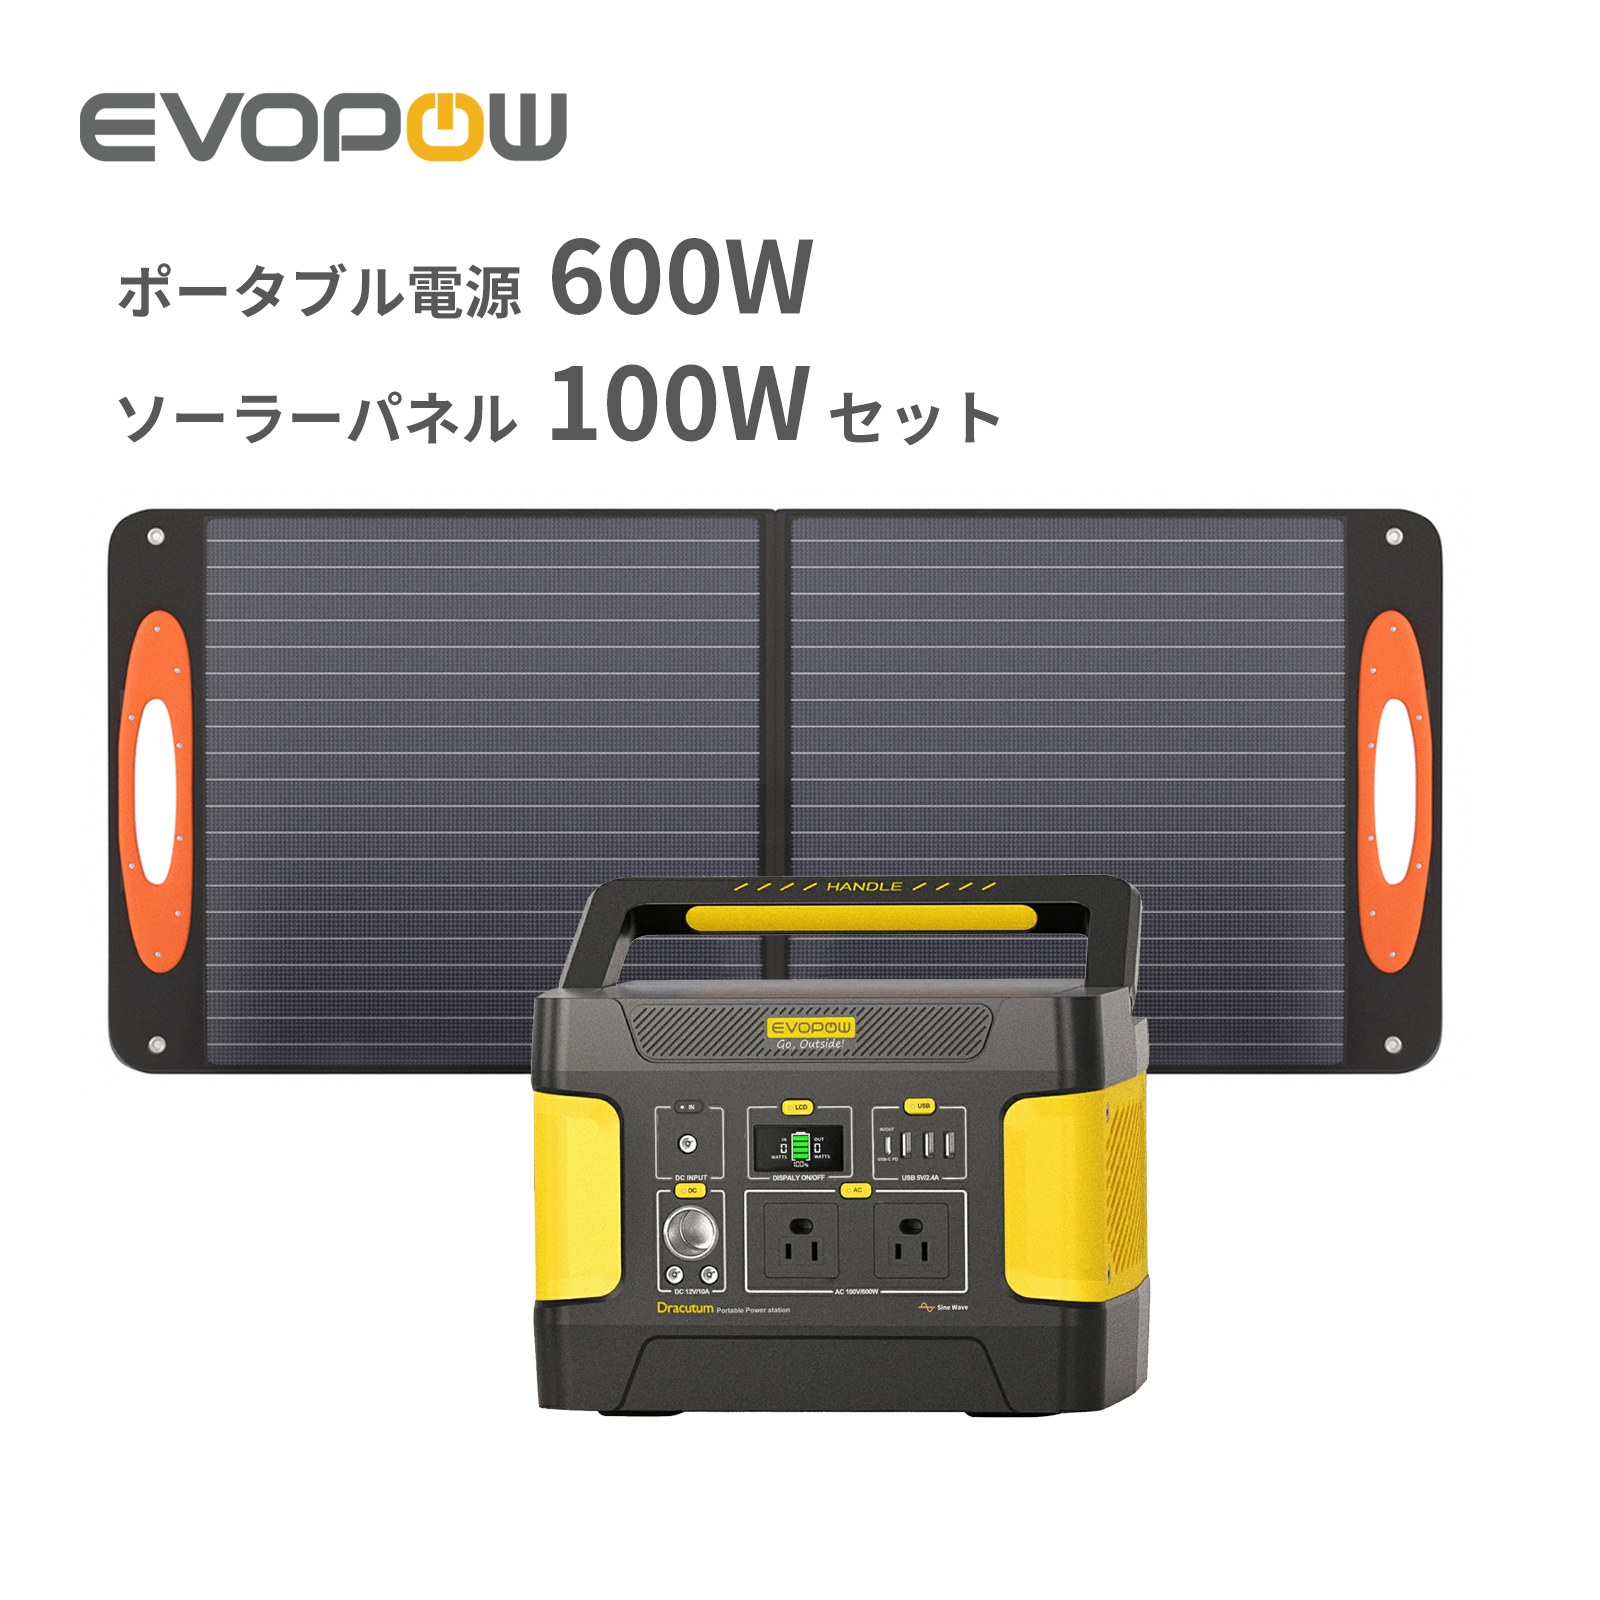 Evopow ポータブル電源 ソーラーパネルセット ポータブル電源 600W